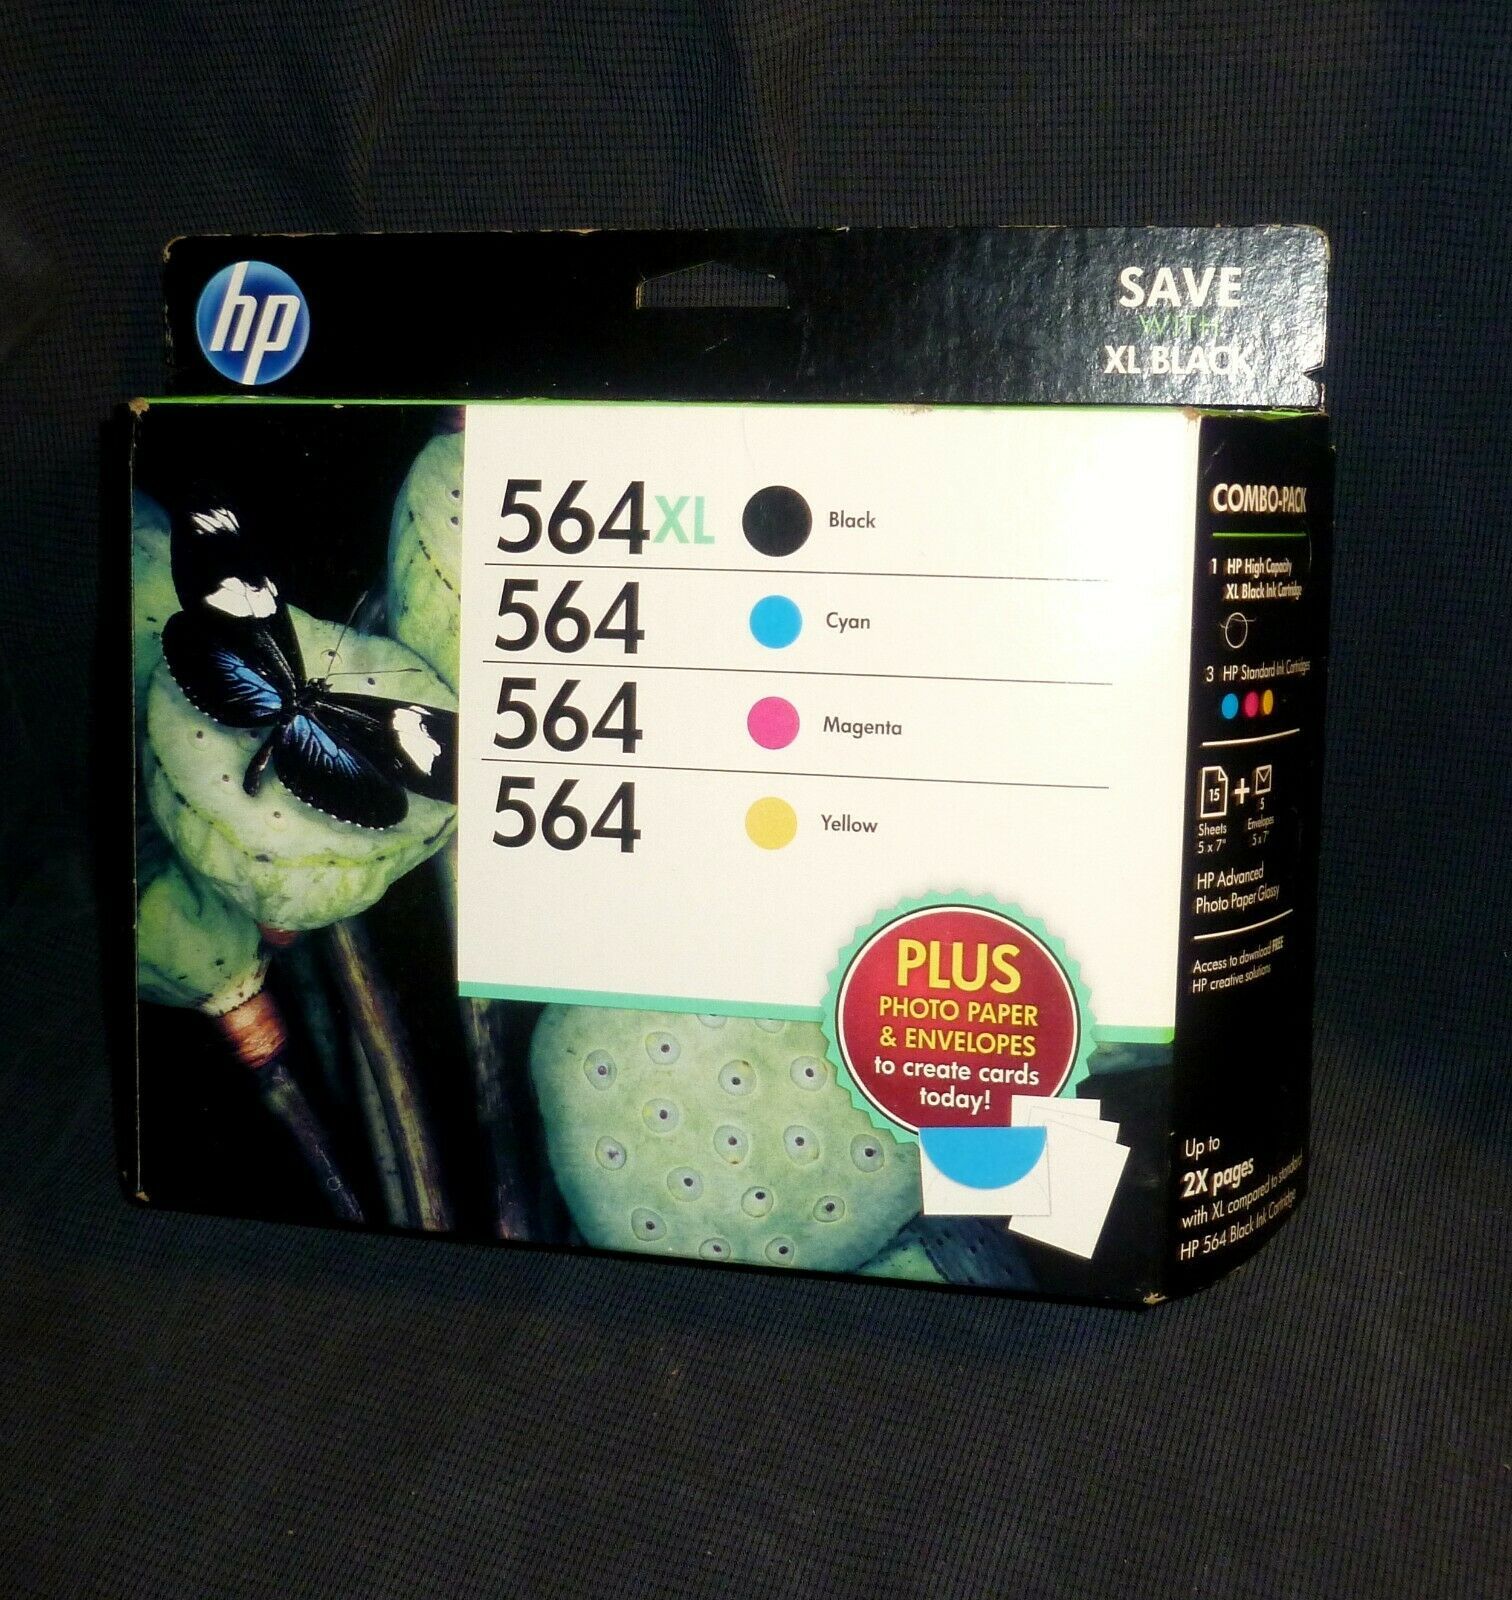 NEW Box HP 564Xl Black & 564 Color Standard Ink Cartridges Nov 2015 exp - $29.69